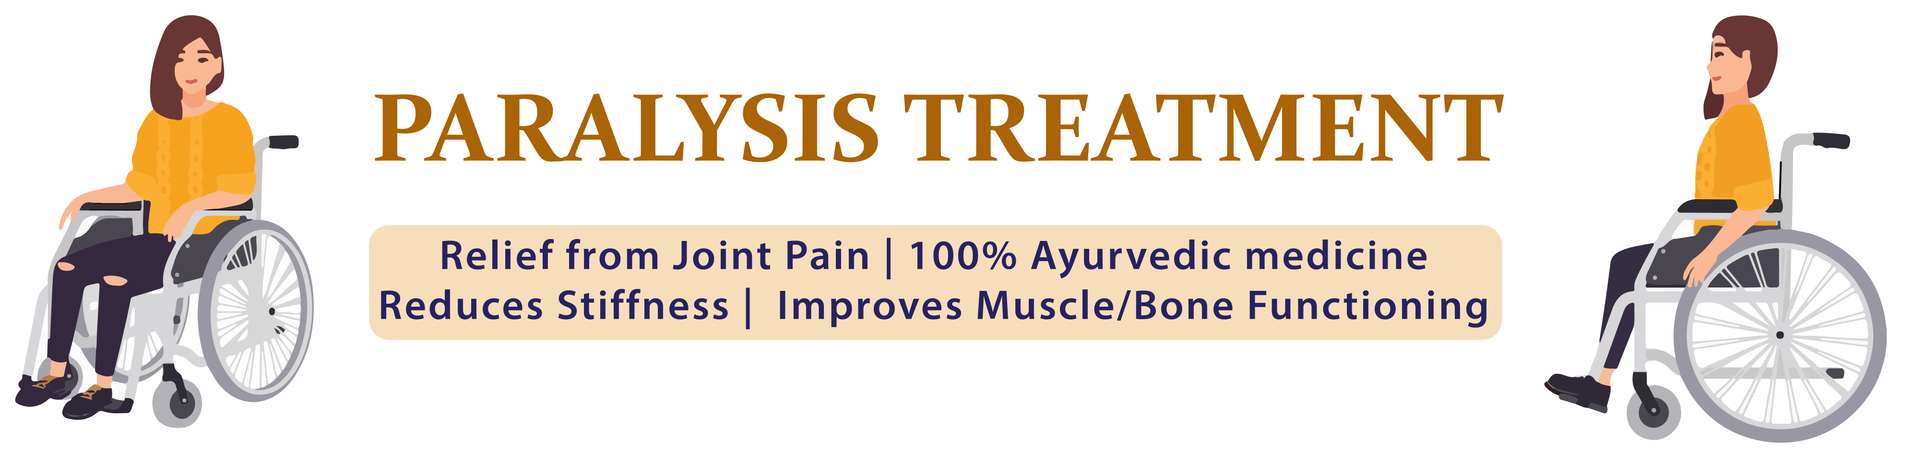 Paralysis Medicine in Ayurveda - Paralysis Treatment